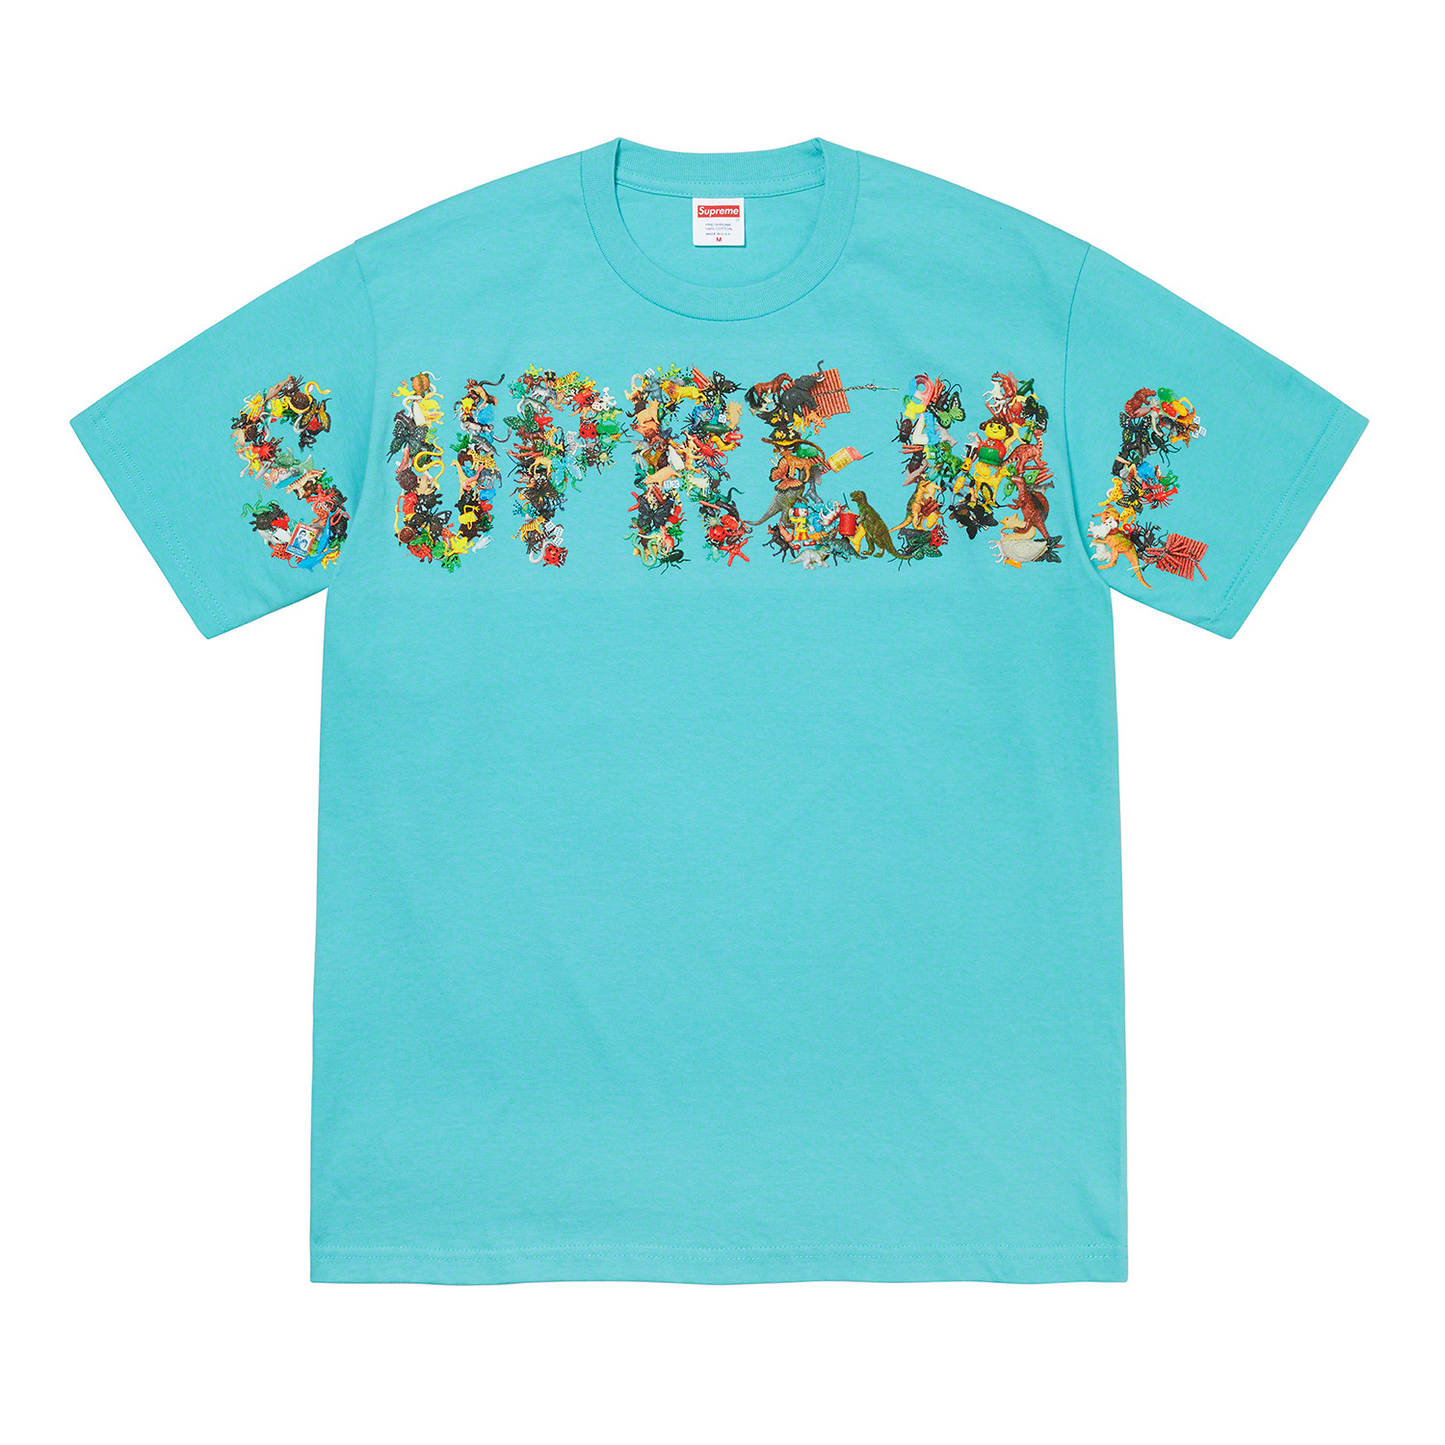 Supreme - Toy Pile Logo T-Shirt (Light Teal)